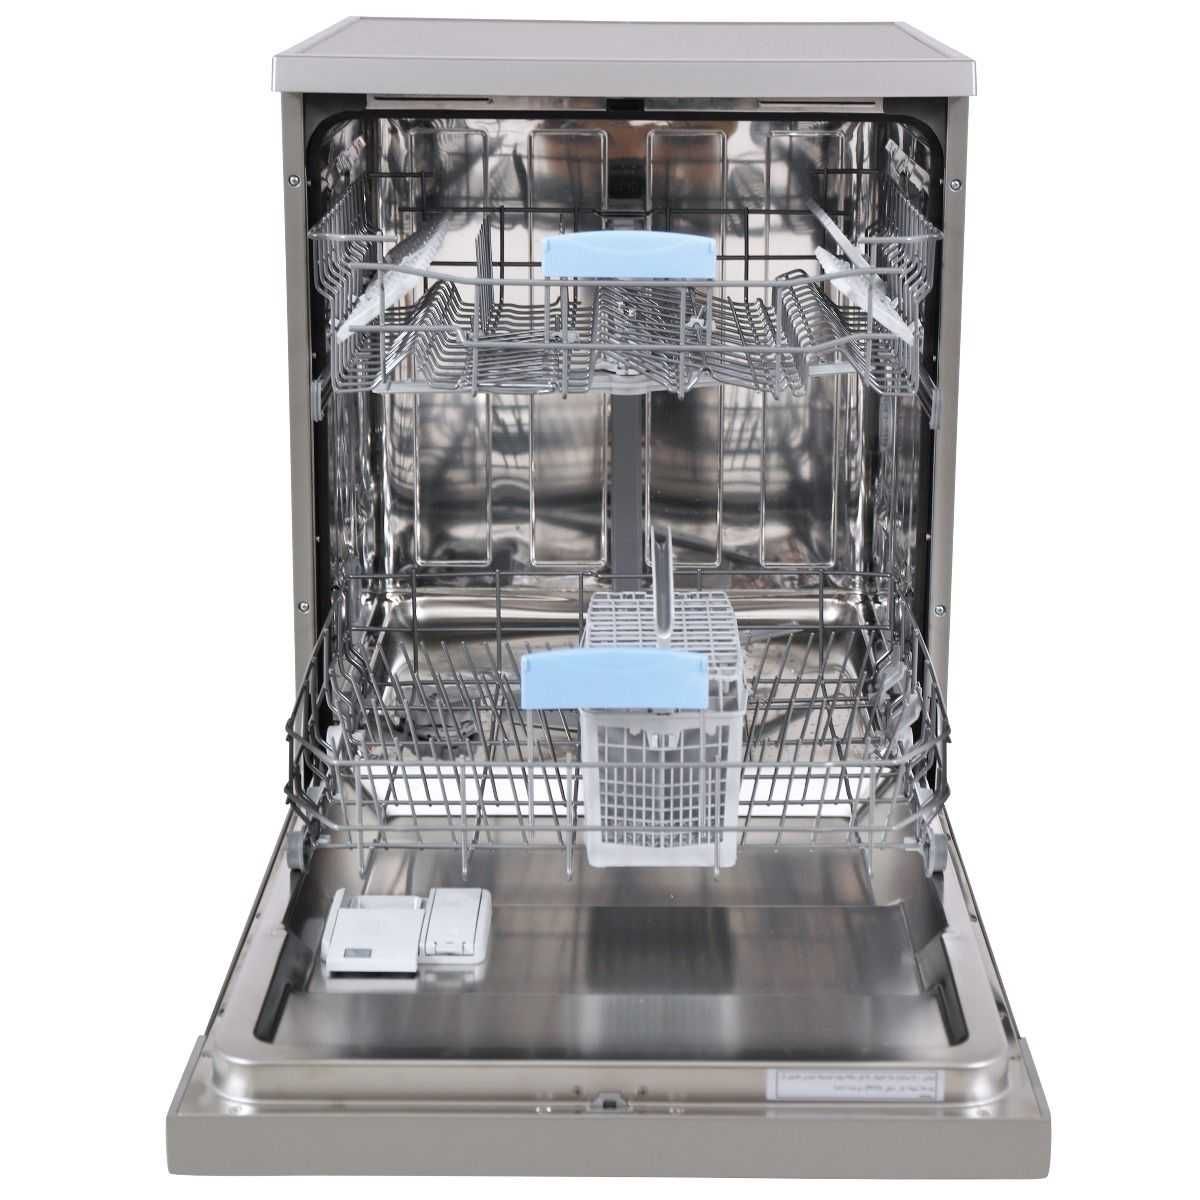 White Point Digital Dishwasher, 13 Place Settings, 6 Programs, Silver - WPD 136 HDS